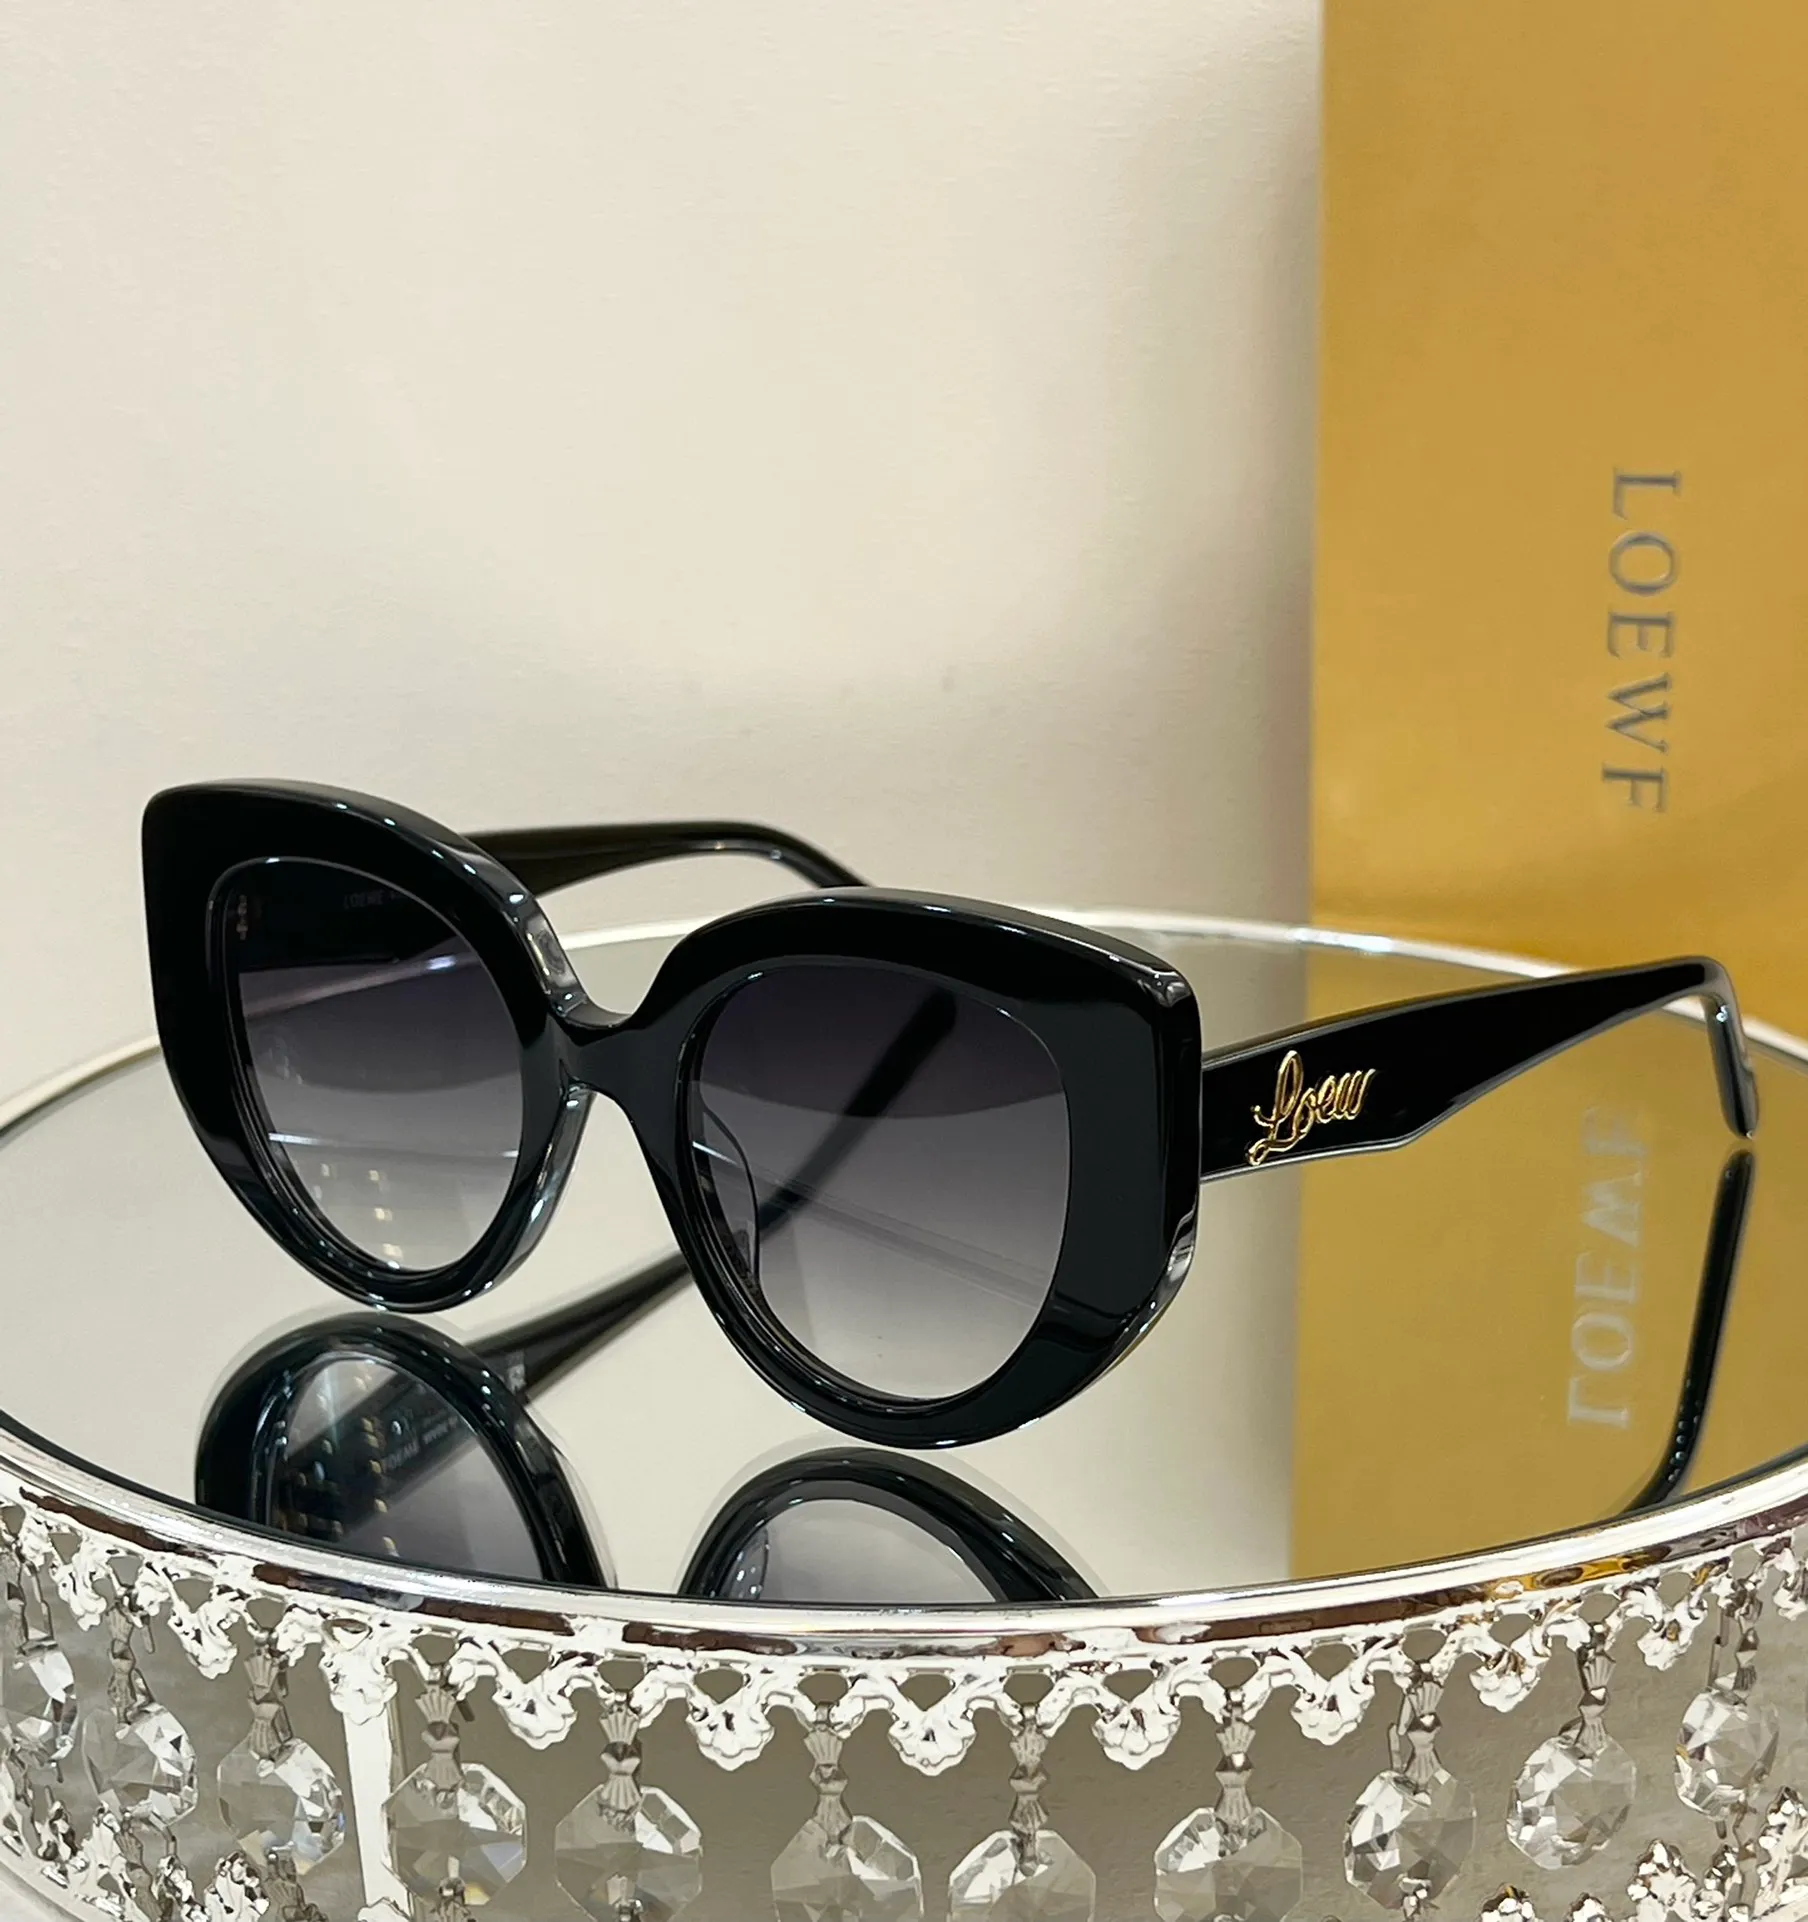 Luxury loewf solglasögon för kvinnor kattögon polariserande glasögon för män plåt uv skydd solglasögon